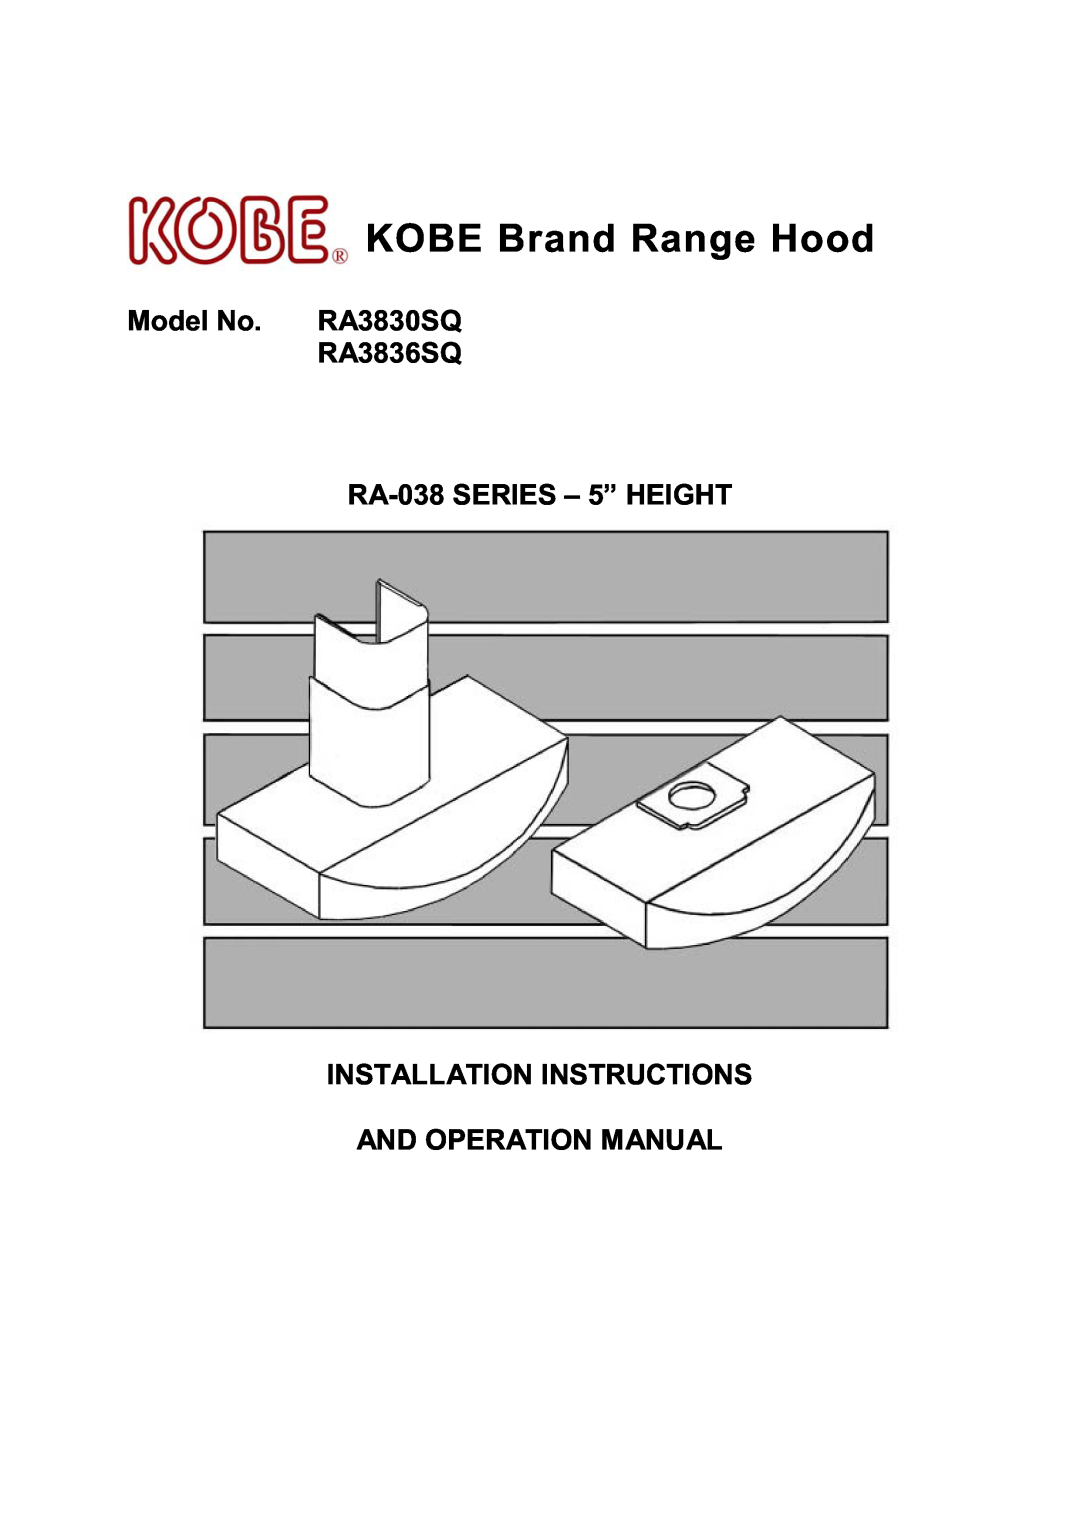 Kobe Range Hoods installation instructions KOBE Brand Range Hood, Model No. RA3830SQ RA3836SQ, RA-038SERIES 5 HEIGHT 